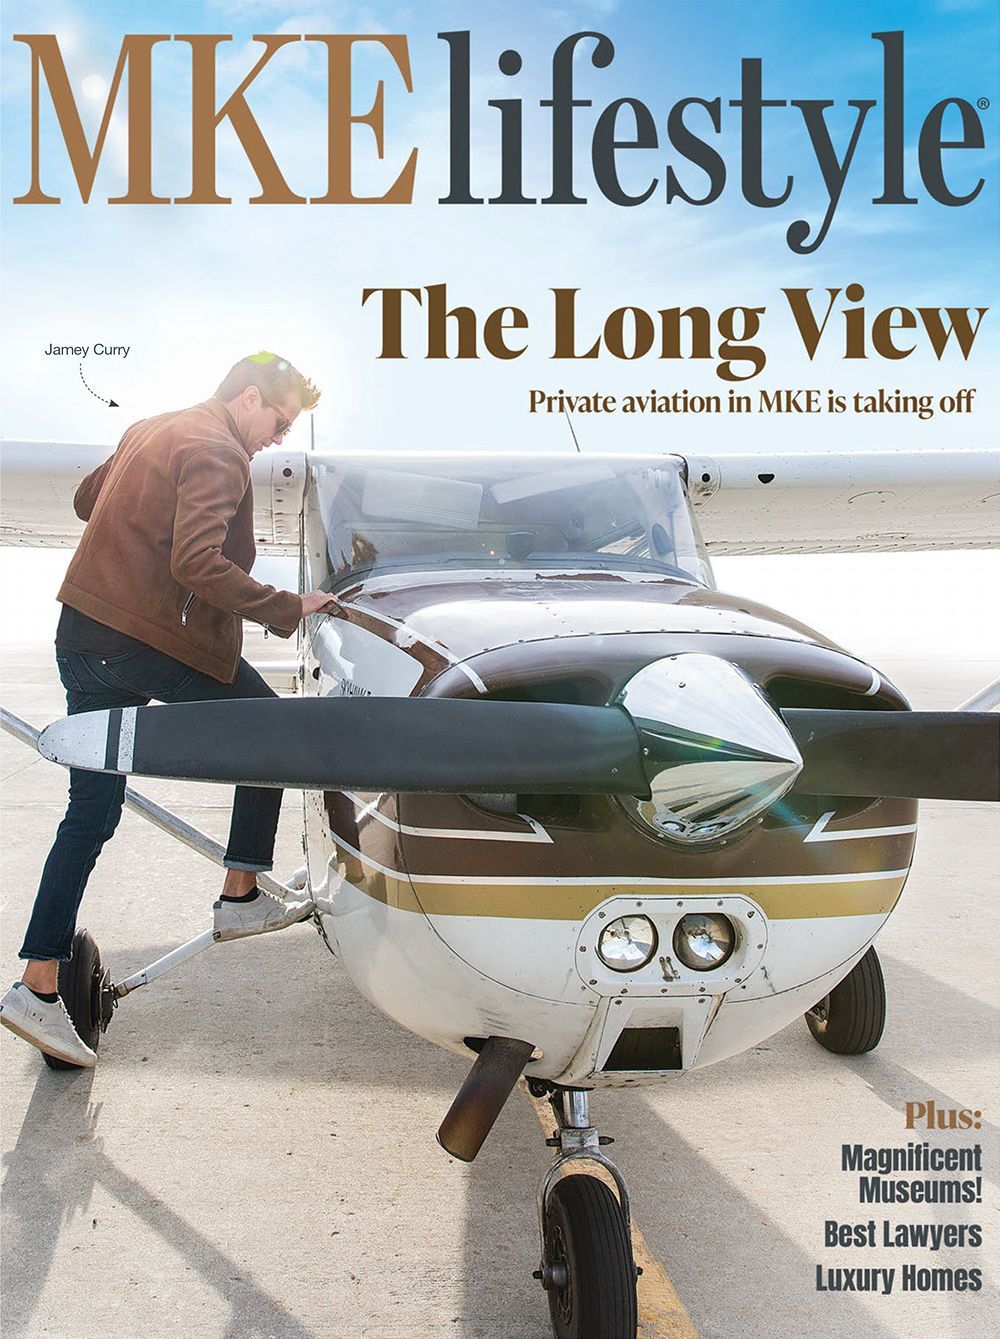 Jamey Curry, owner of Milwaukee Aero on the cover of MKE Lifestyle magazine